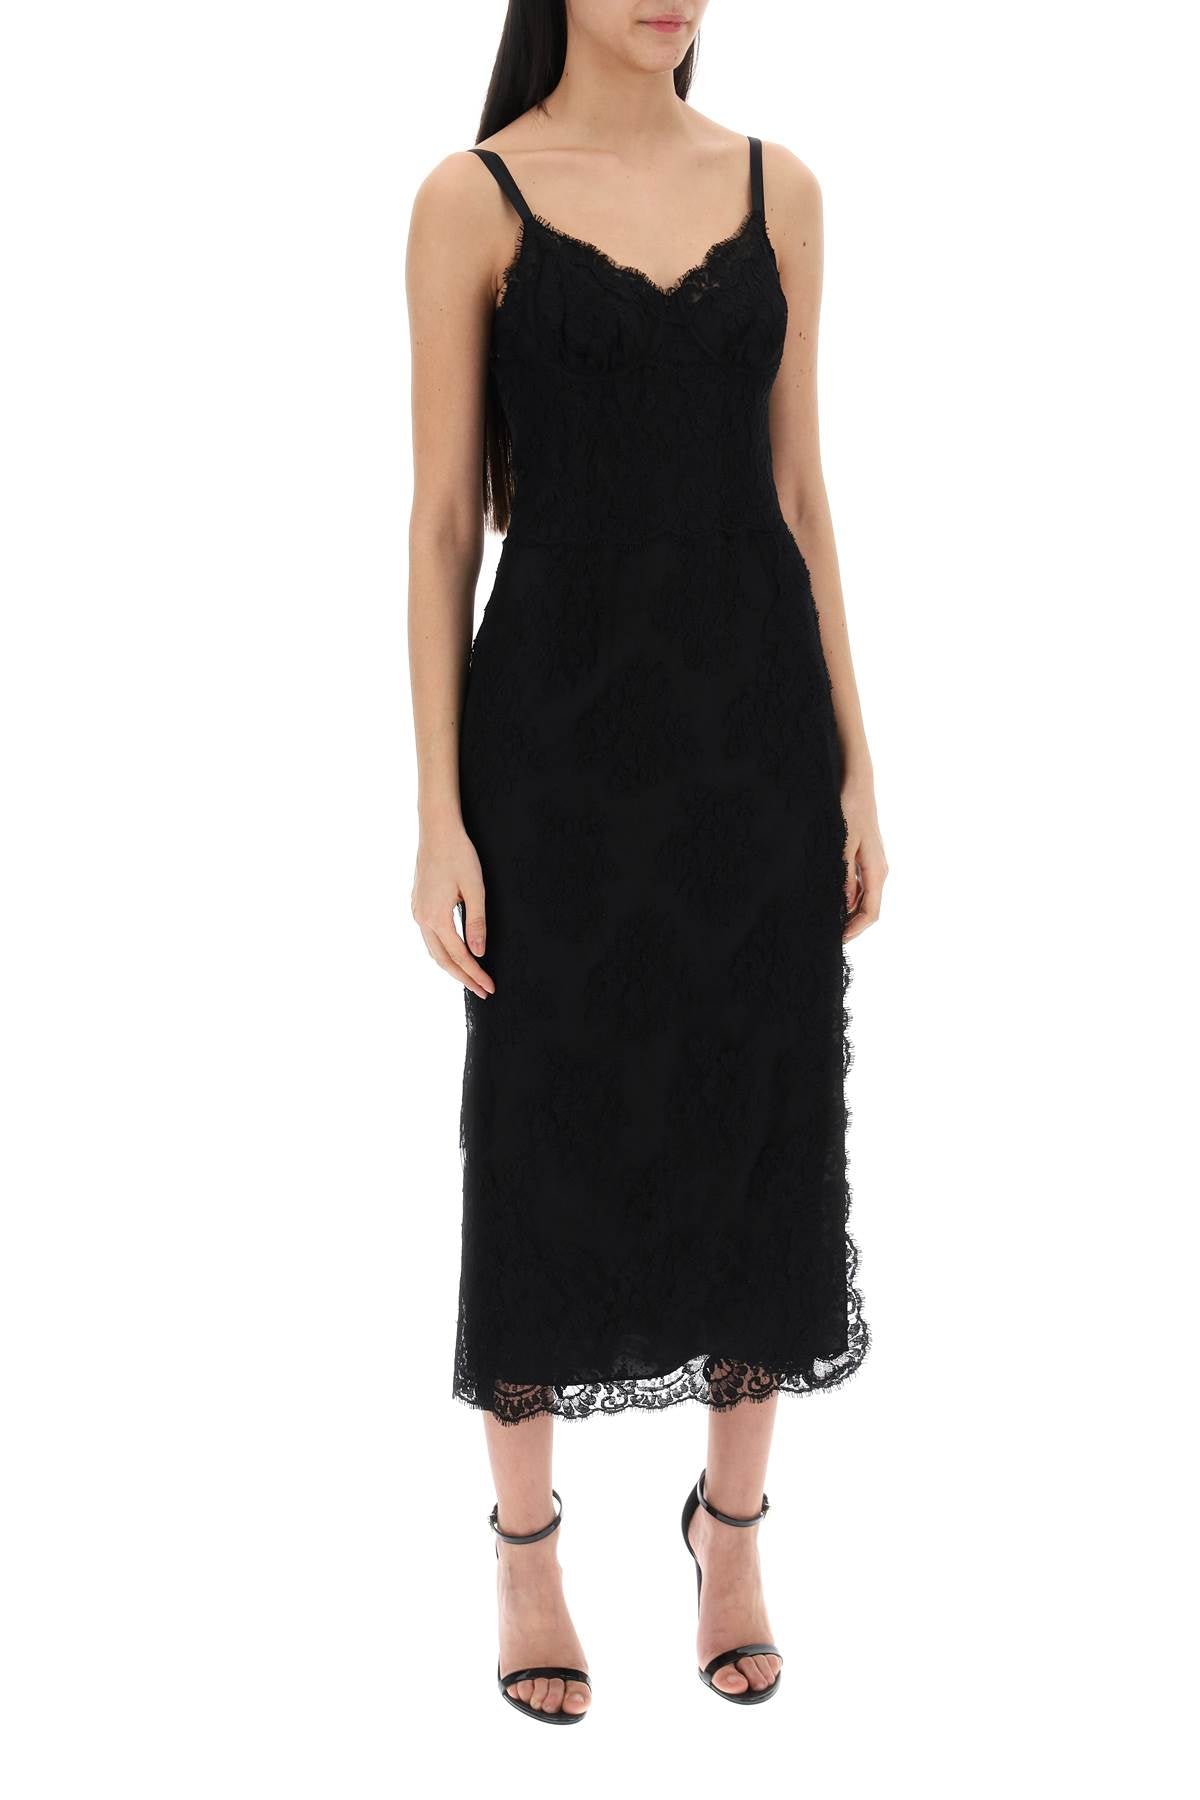 midi lace dress with slit-1